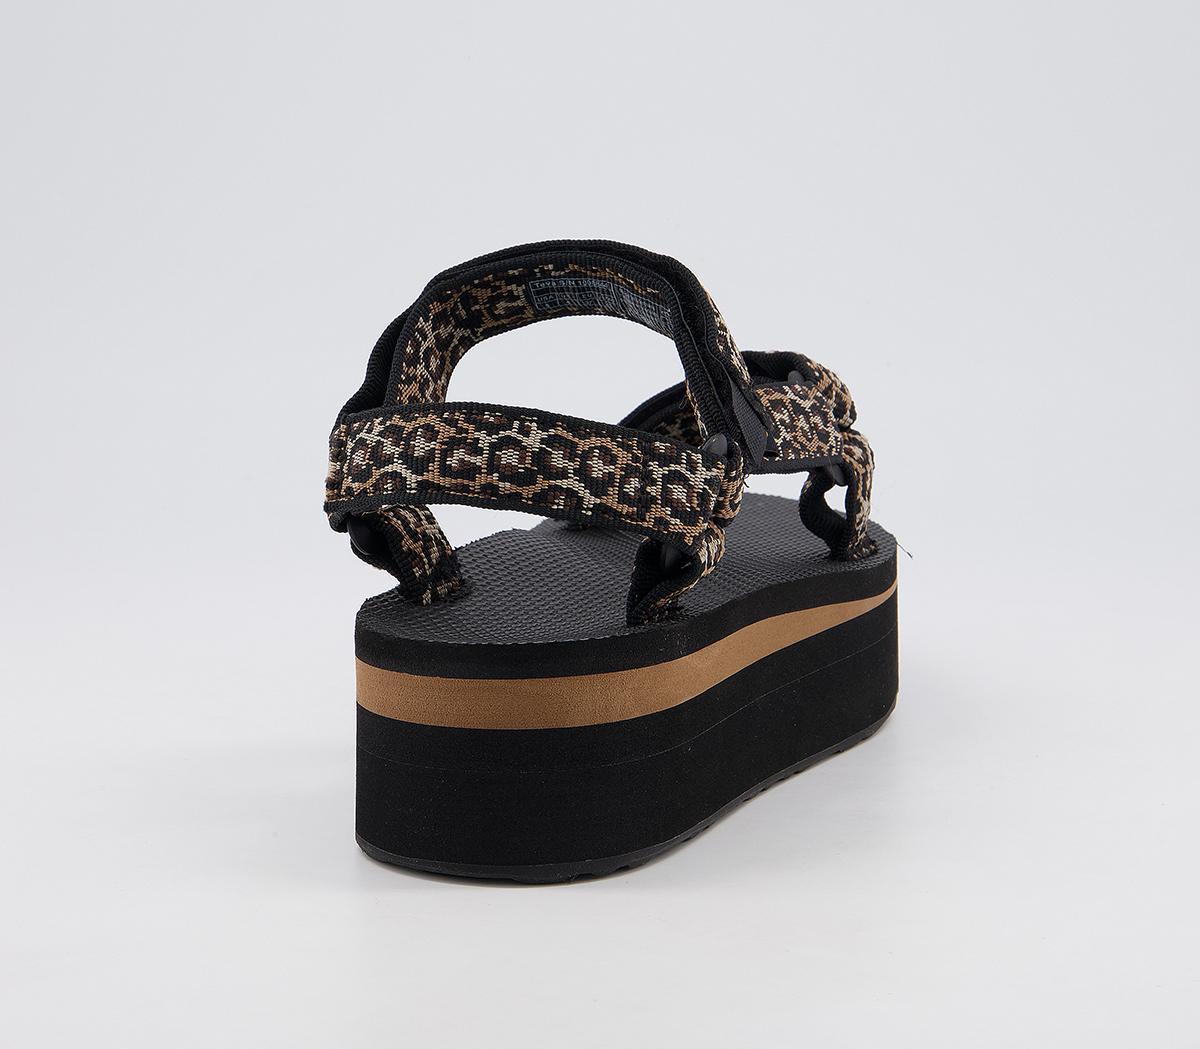 Teva Flatform Universal Sandals Leopard - Womenâs Sandals